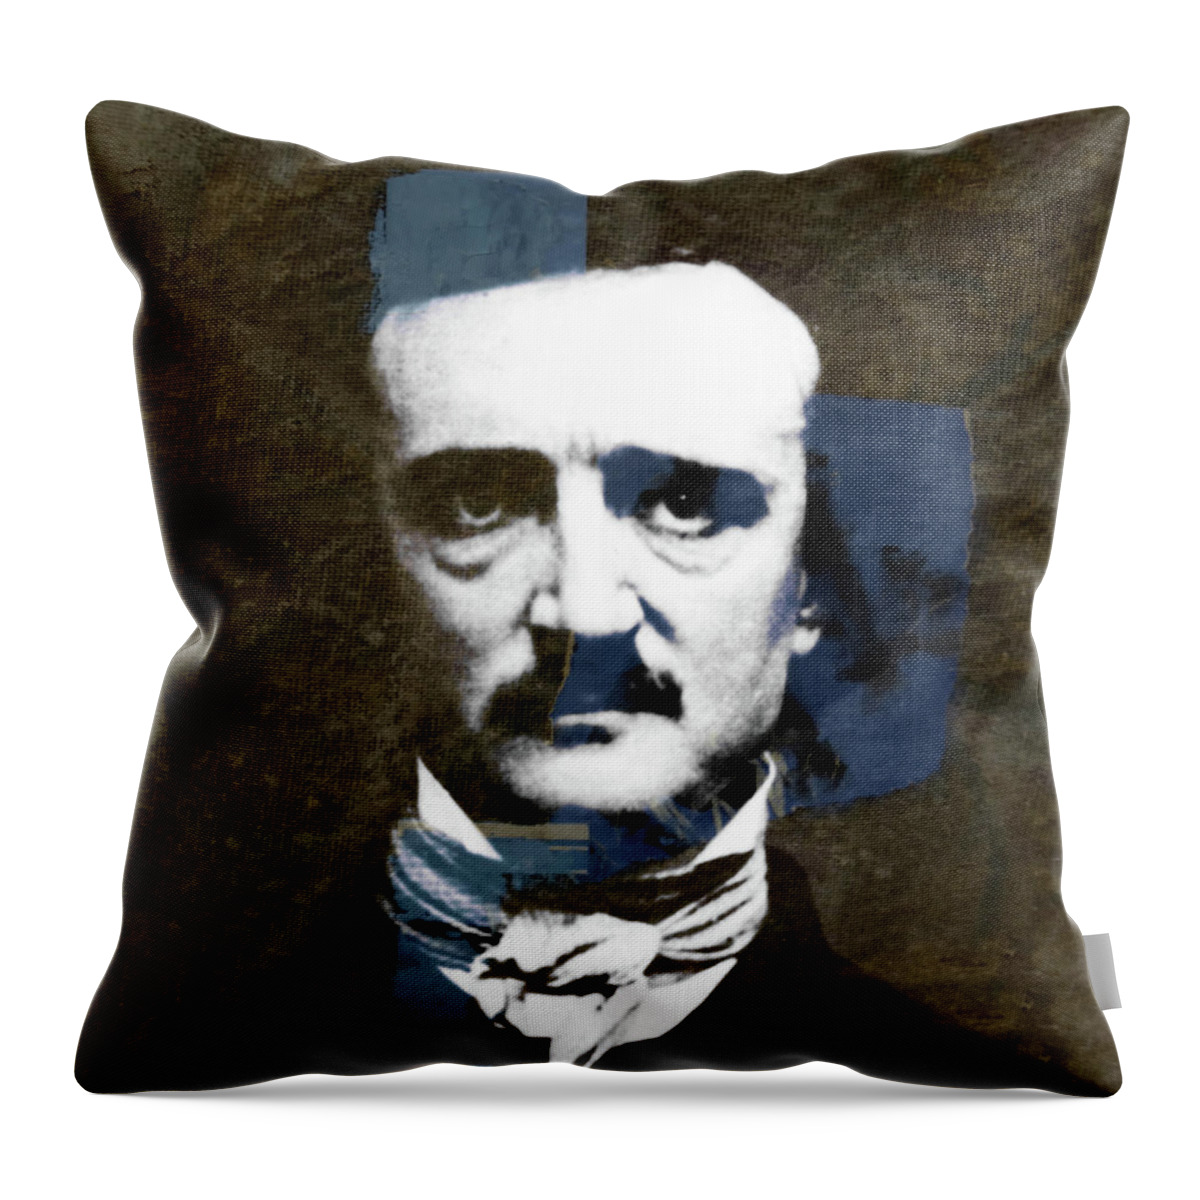 Edgar Allan Poe Throw Pillow featuring the mixed media Edgar Allan Poe by Paul Lovering